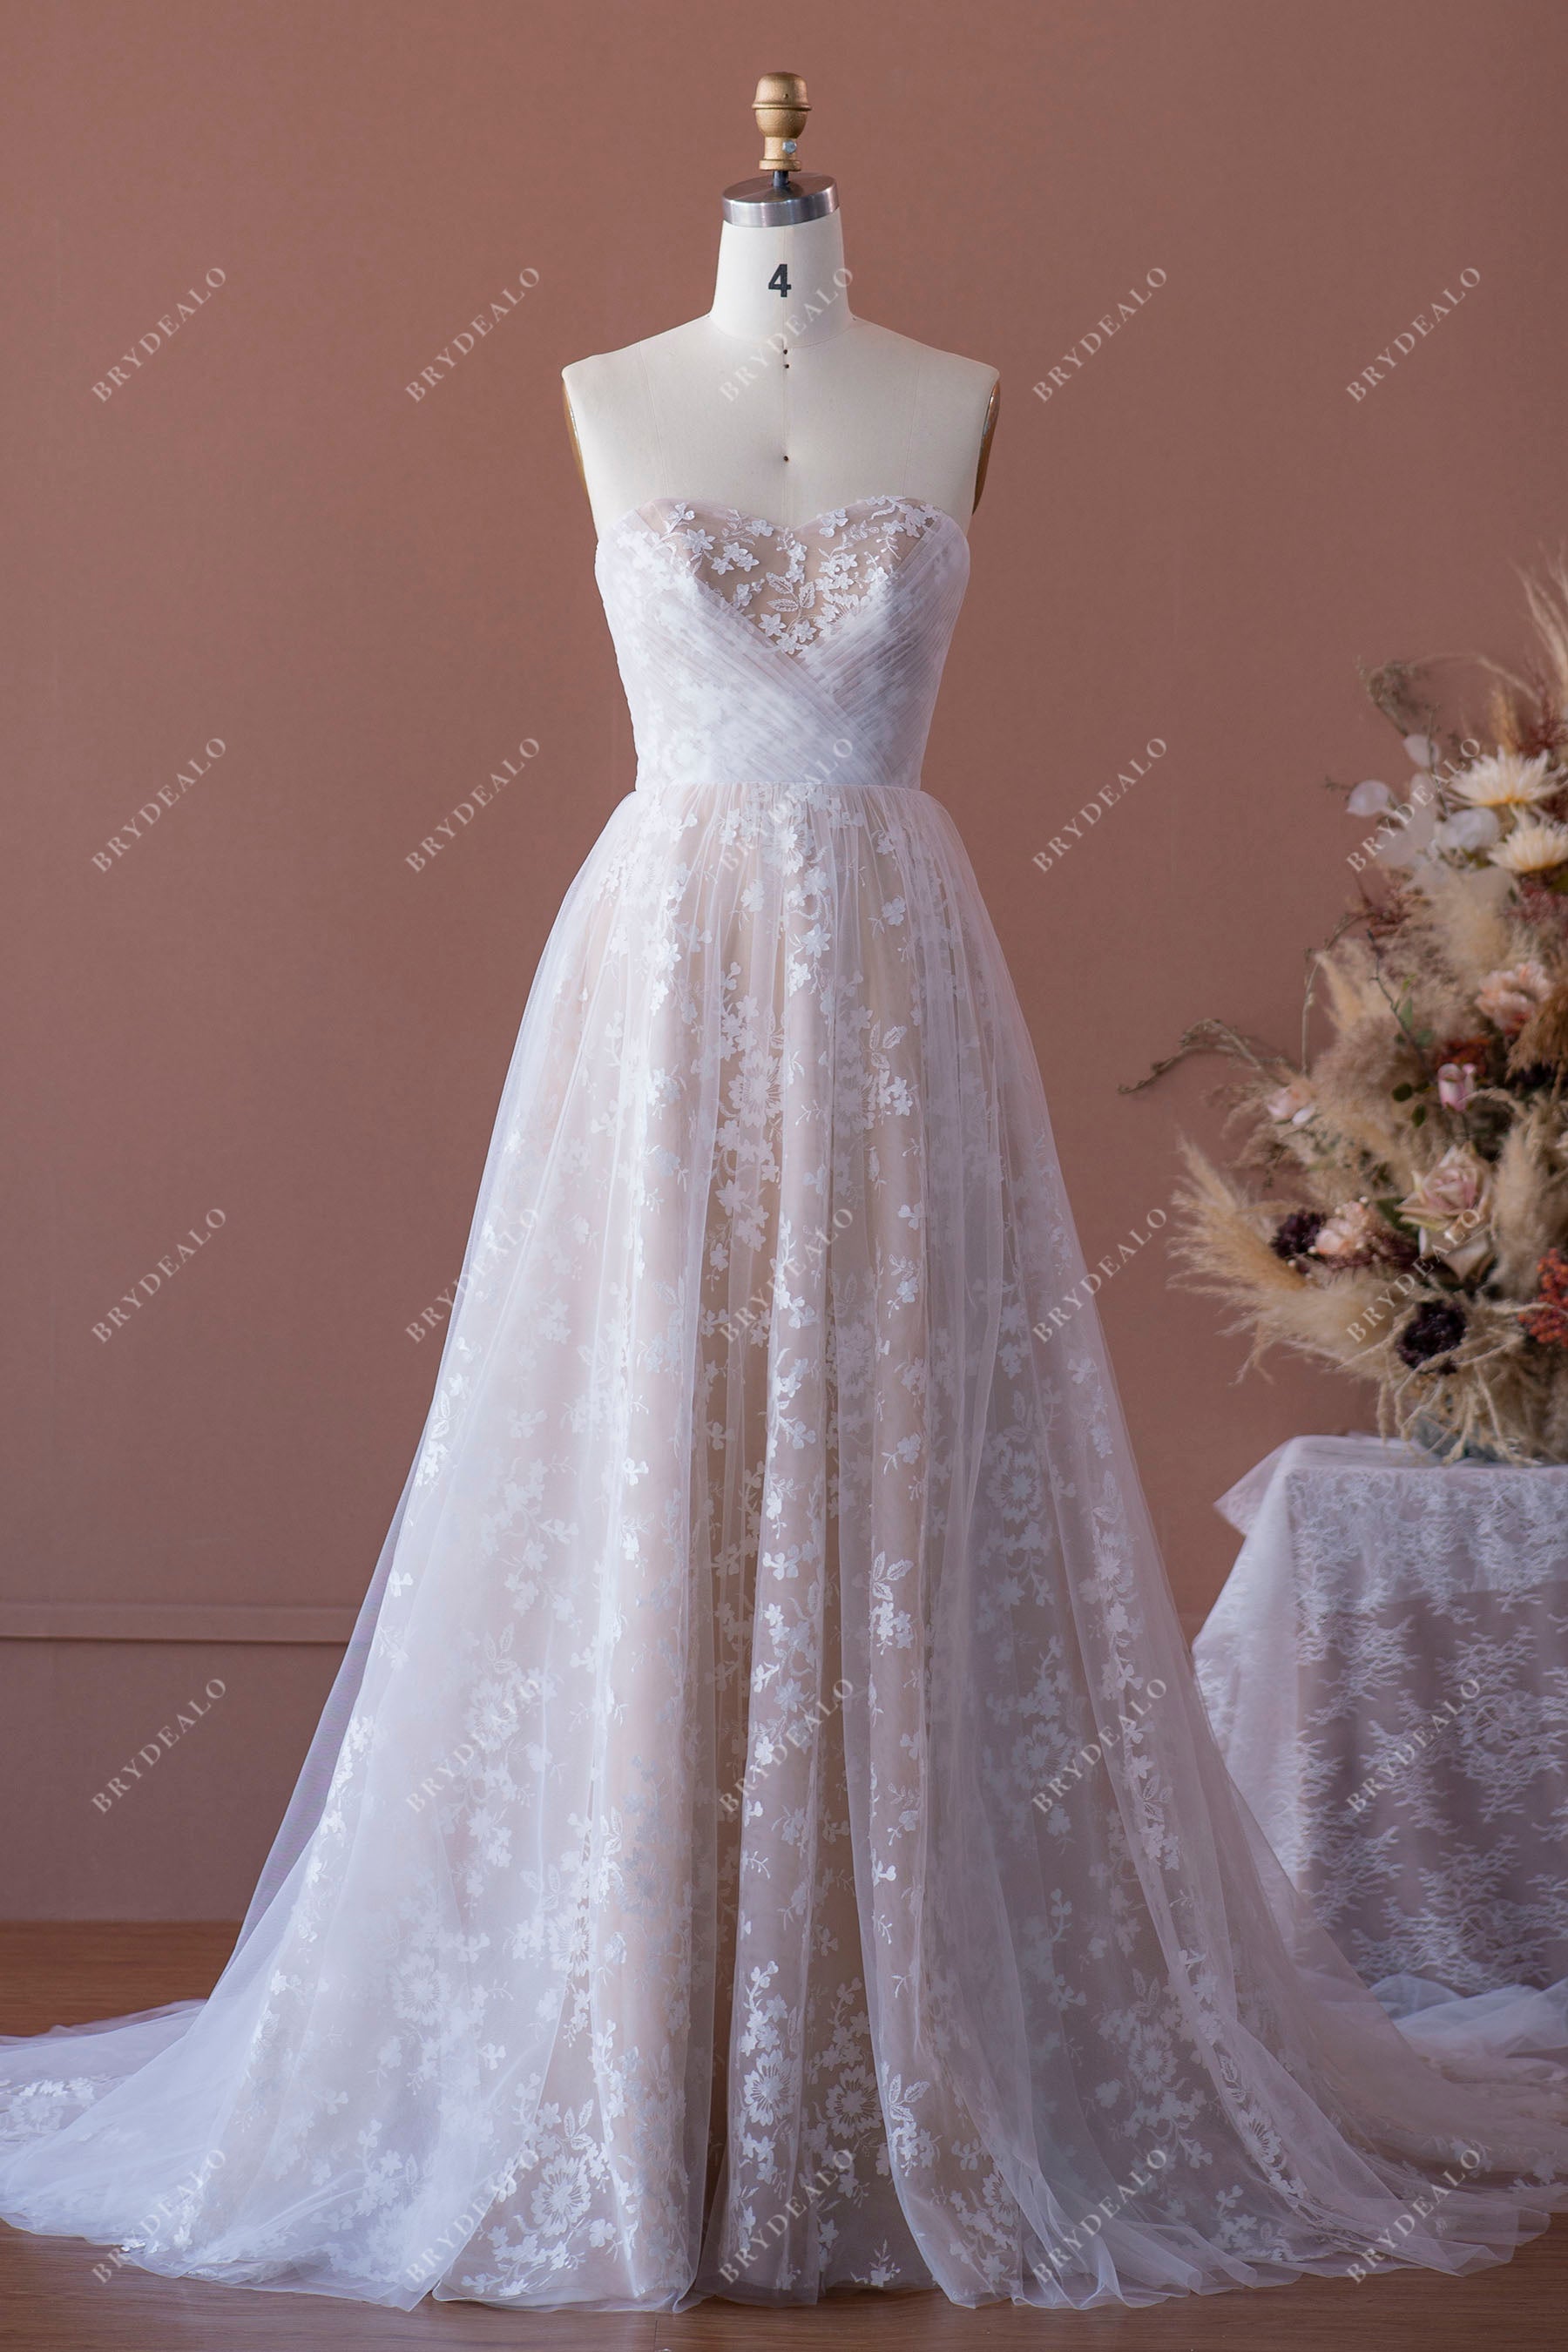 Nude Beige Sweetheart Neck A-line Lace Destination Wedding Dress